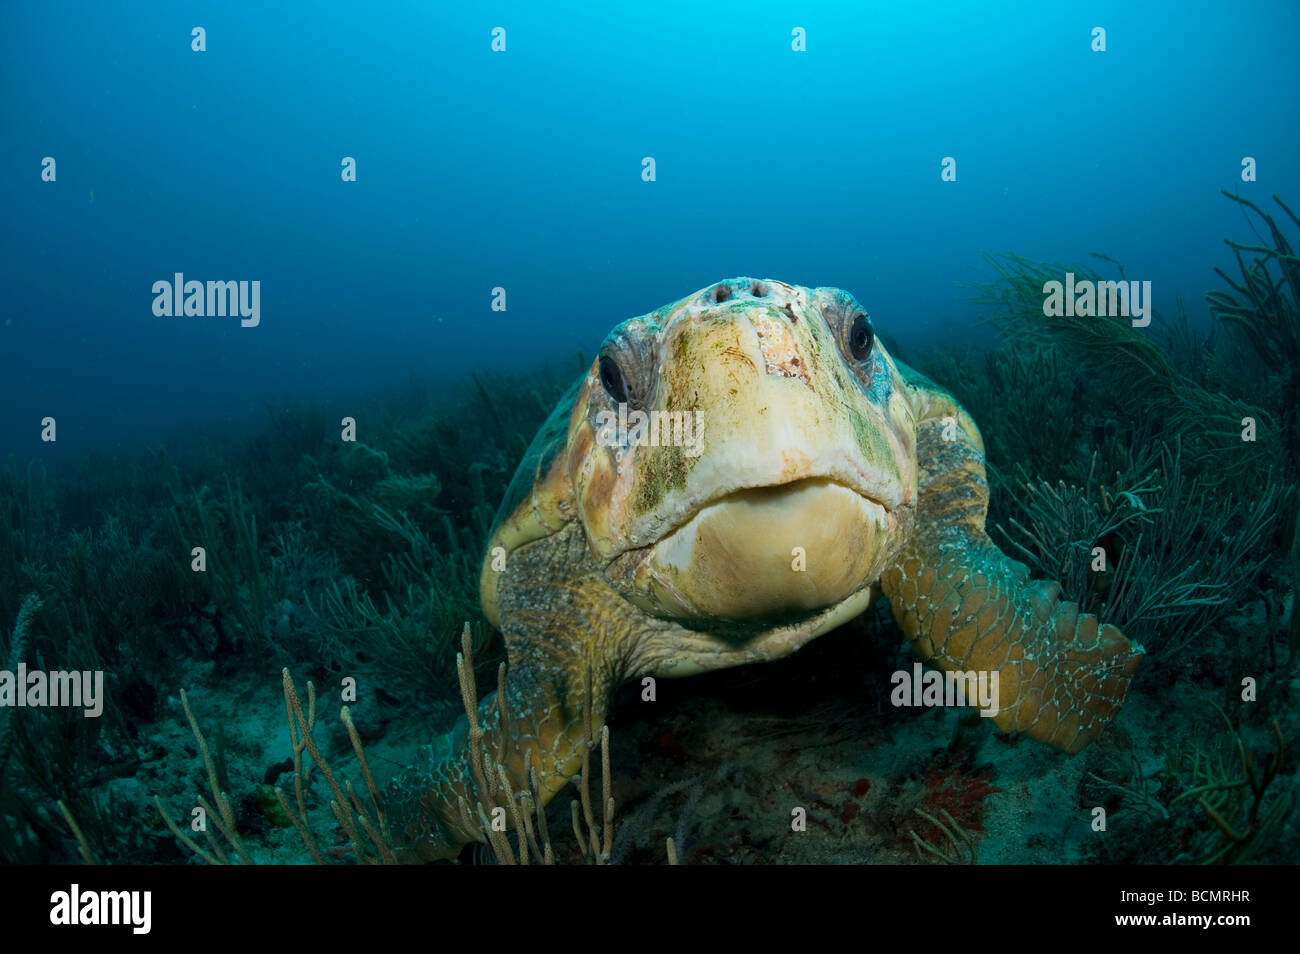 Female Loggerhead Sea Turtle (Caretta caretta) photographed underwater in Paul's Reef in Palm Beach, Florida. Stock Photo